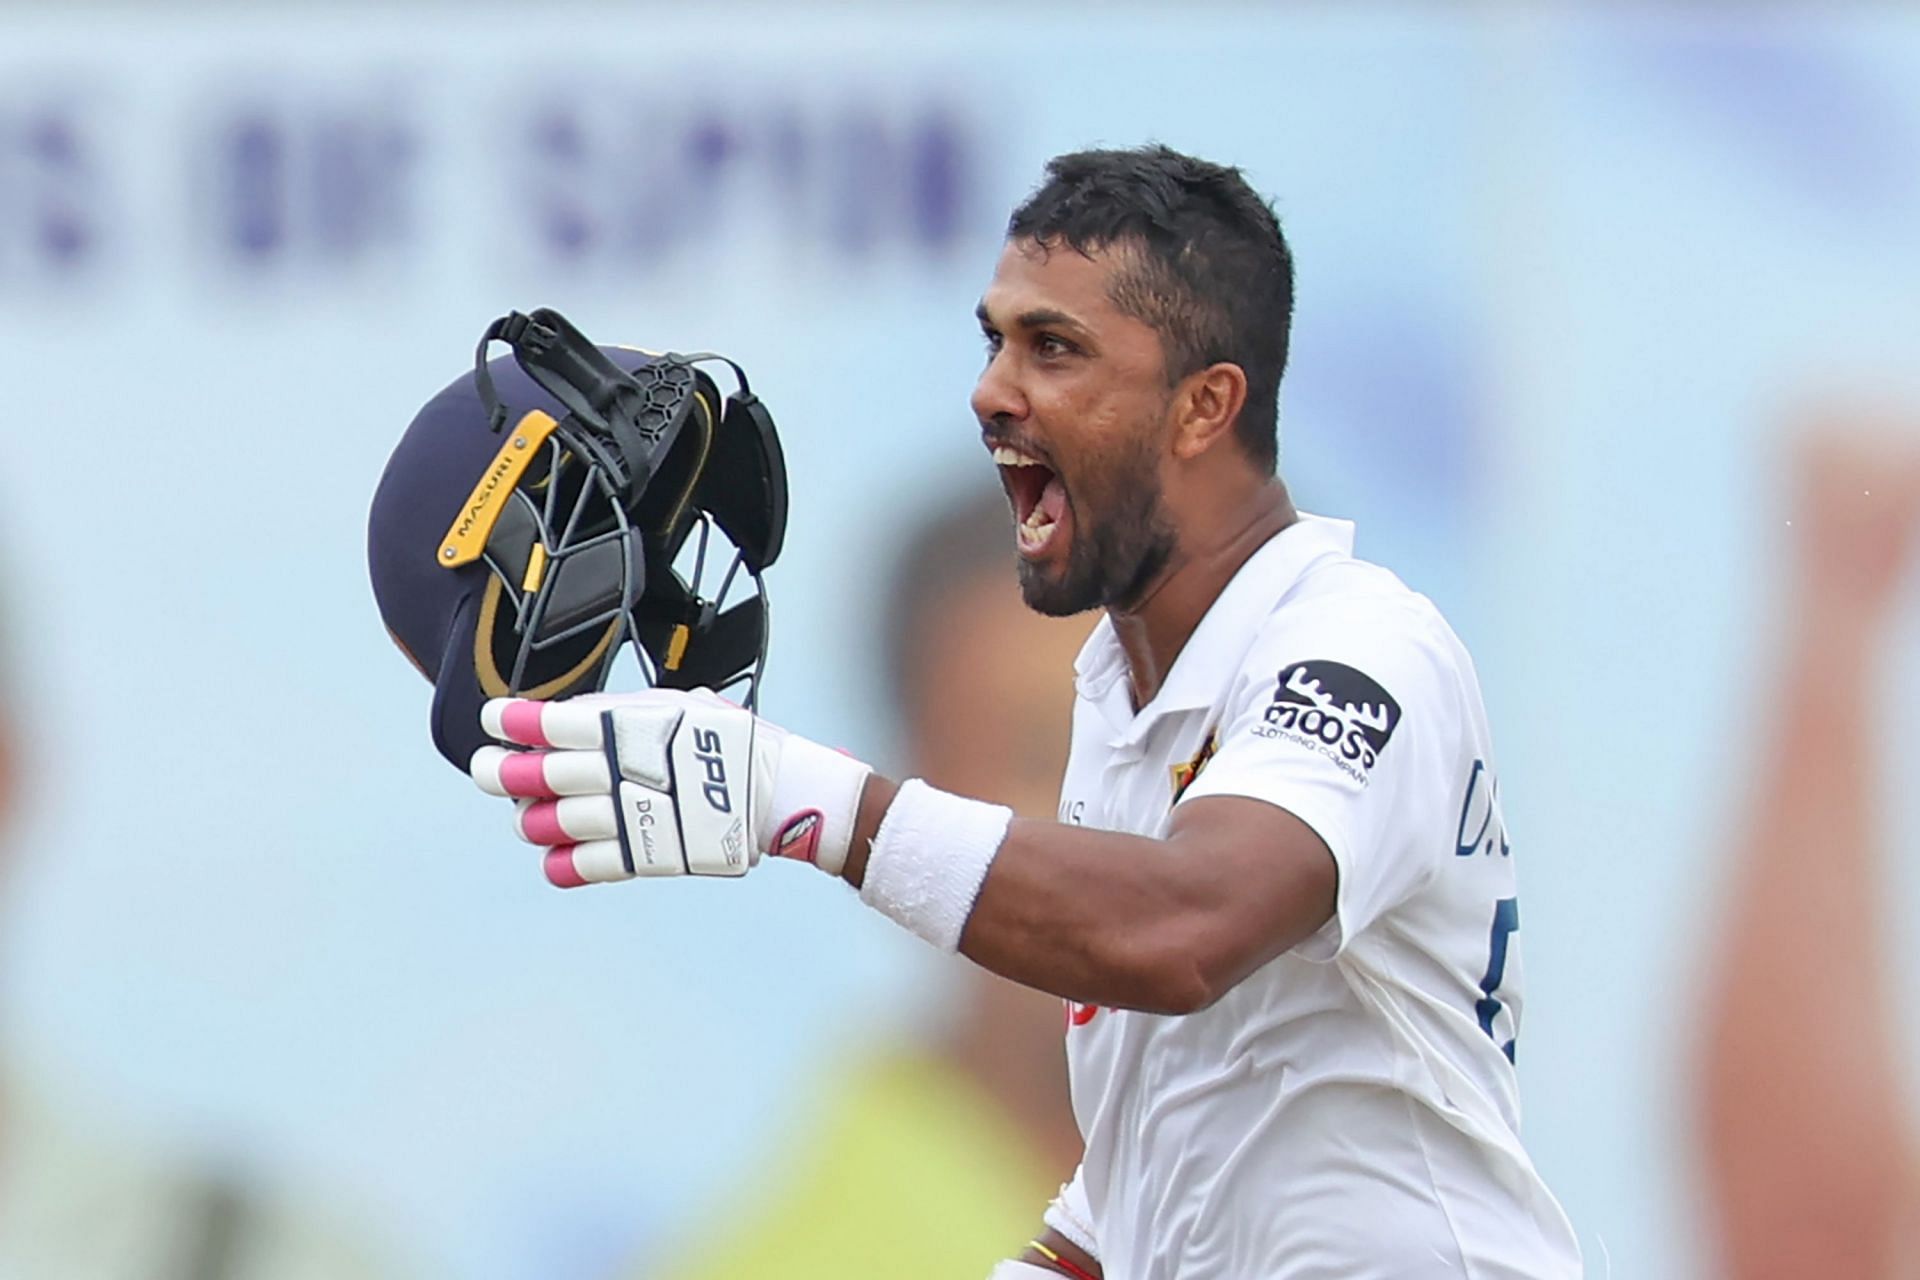 Sri Lanka v Australia - Second Test: Day 4 (Image courtesy: Getty Images)